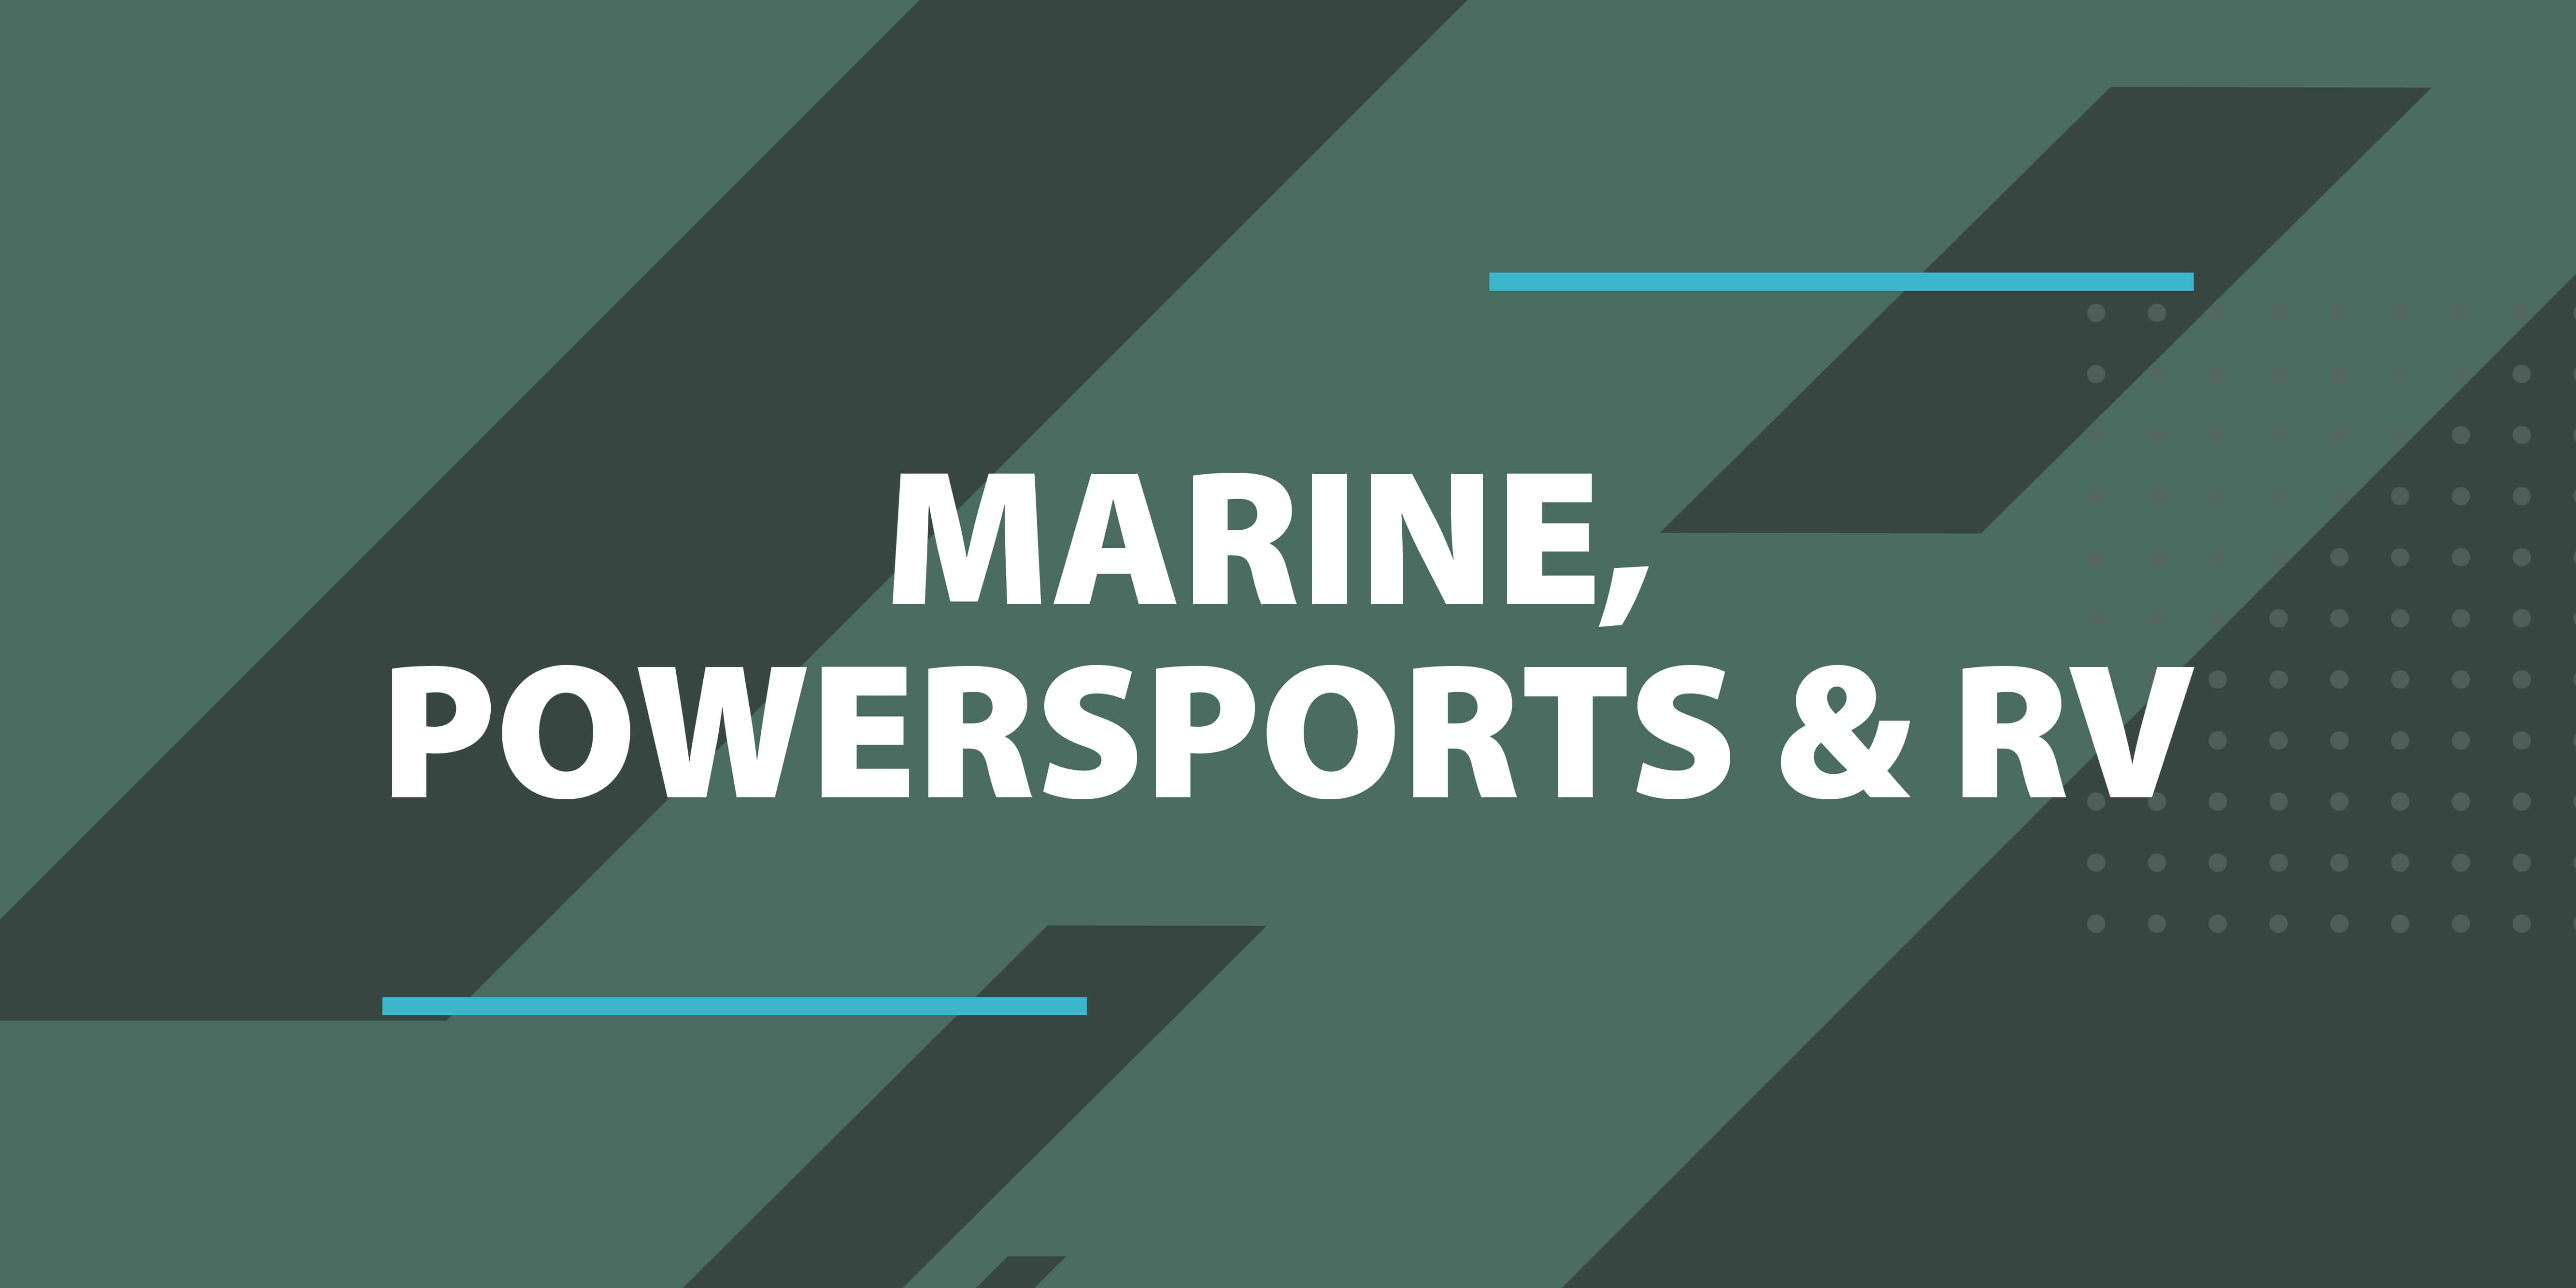 Marine, Powersports & RV